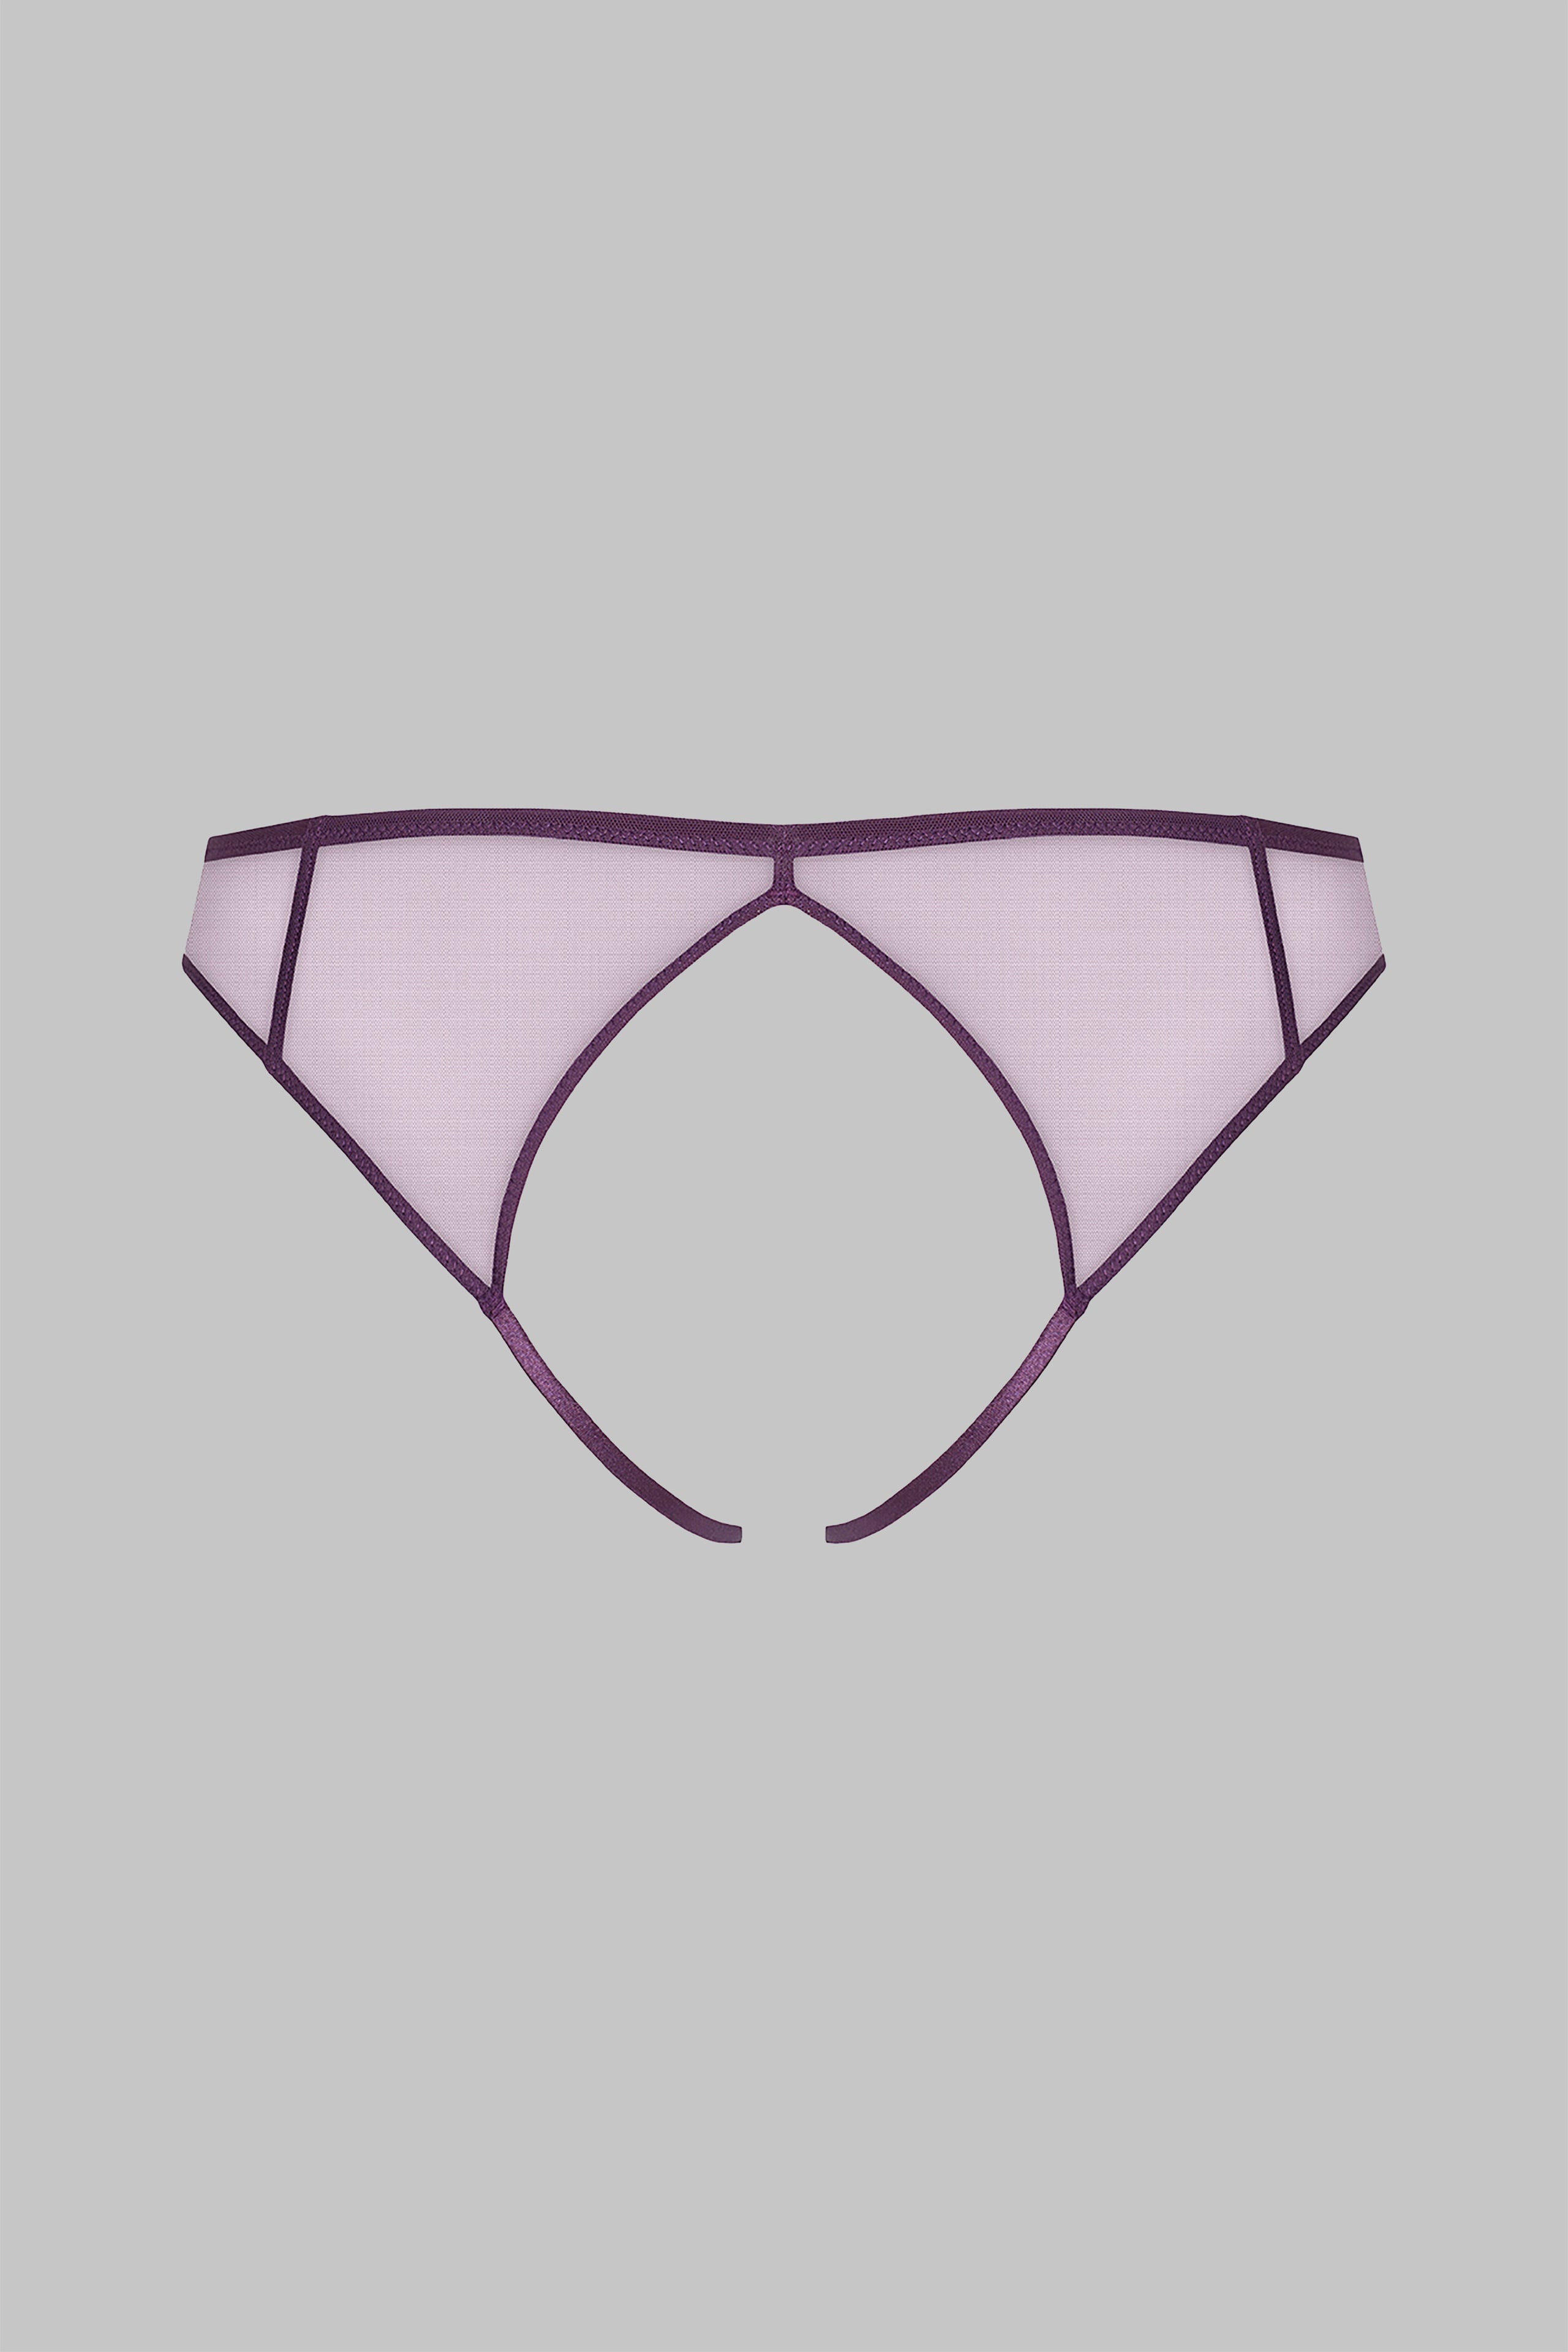 culotte-ouverte-lamoureuse-orchidee-violette-maison-close